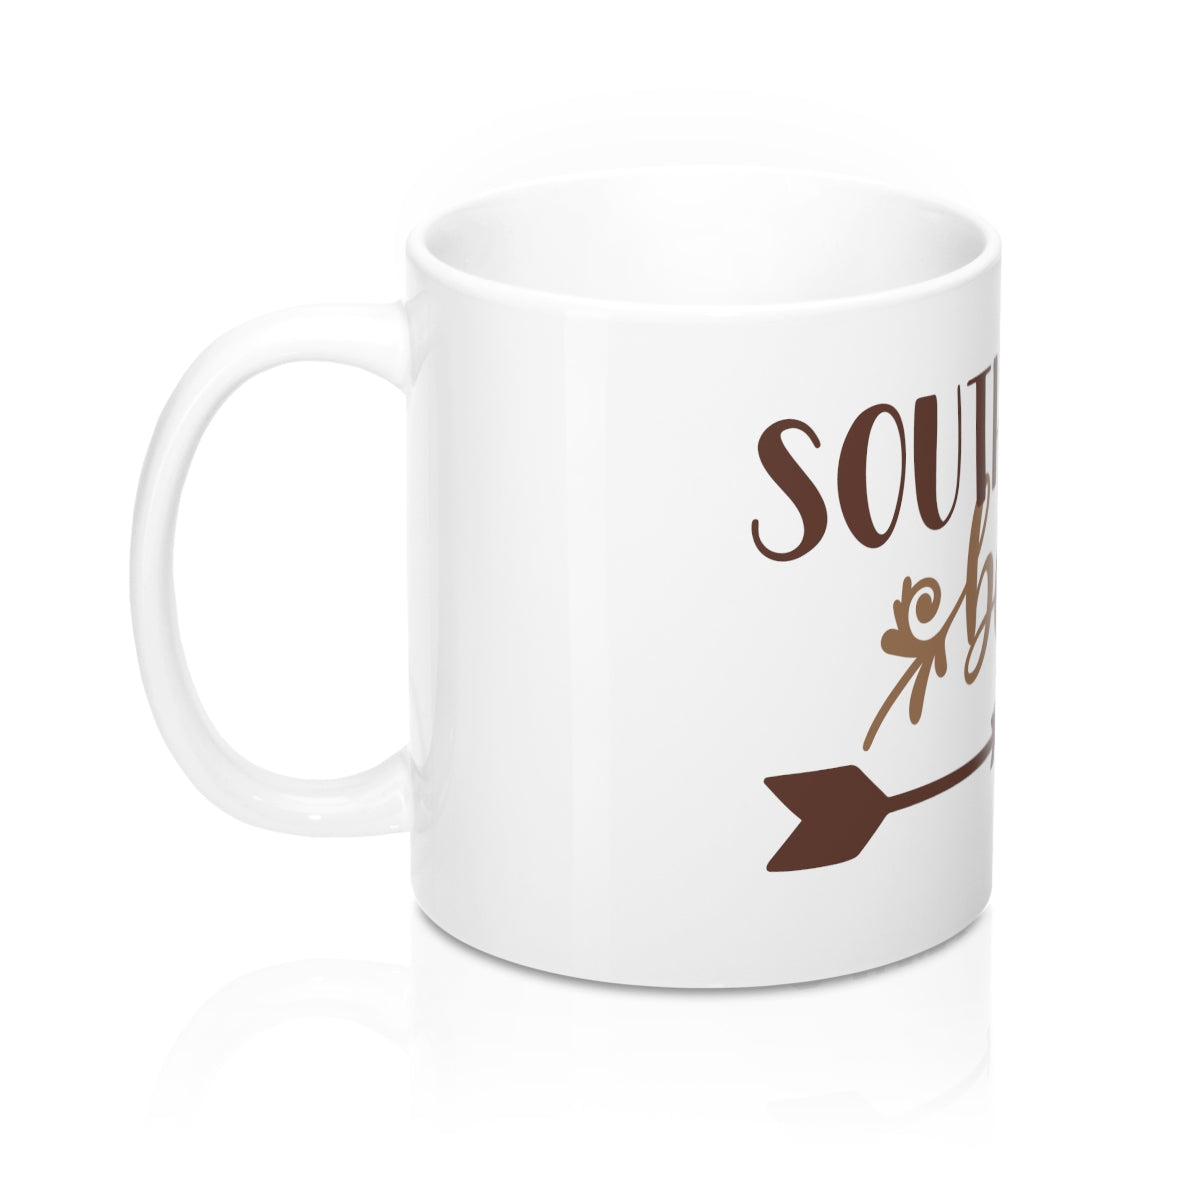 Southern Belle Swag Ceramic 11oz Mug - Inspired By Savy